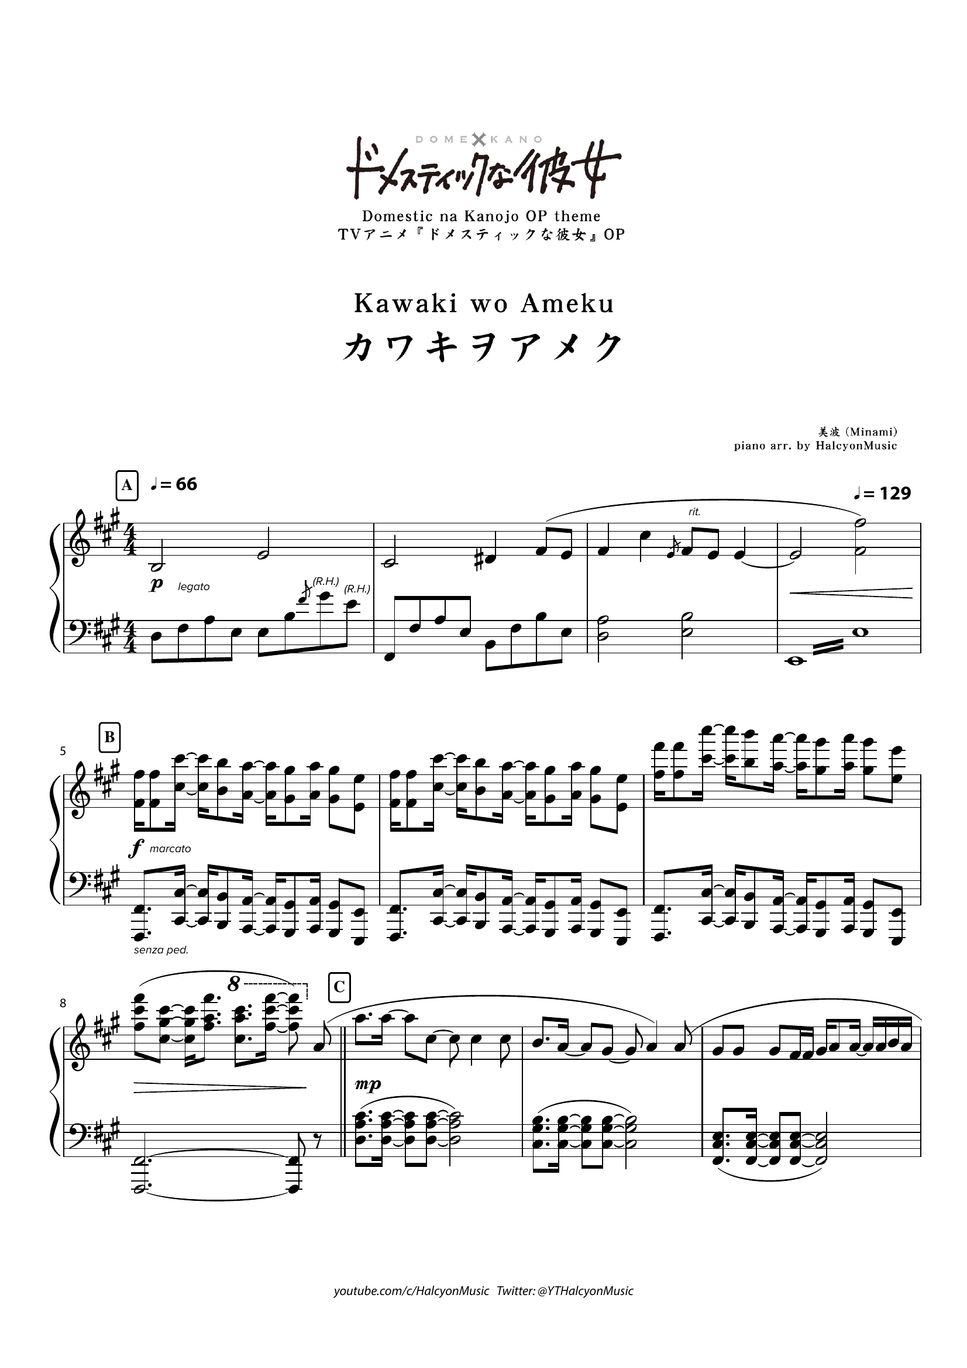 Domestic na Kanojo Opening - Kawaki wo Ameku (Piano) 